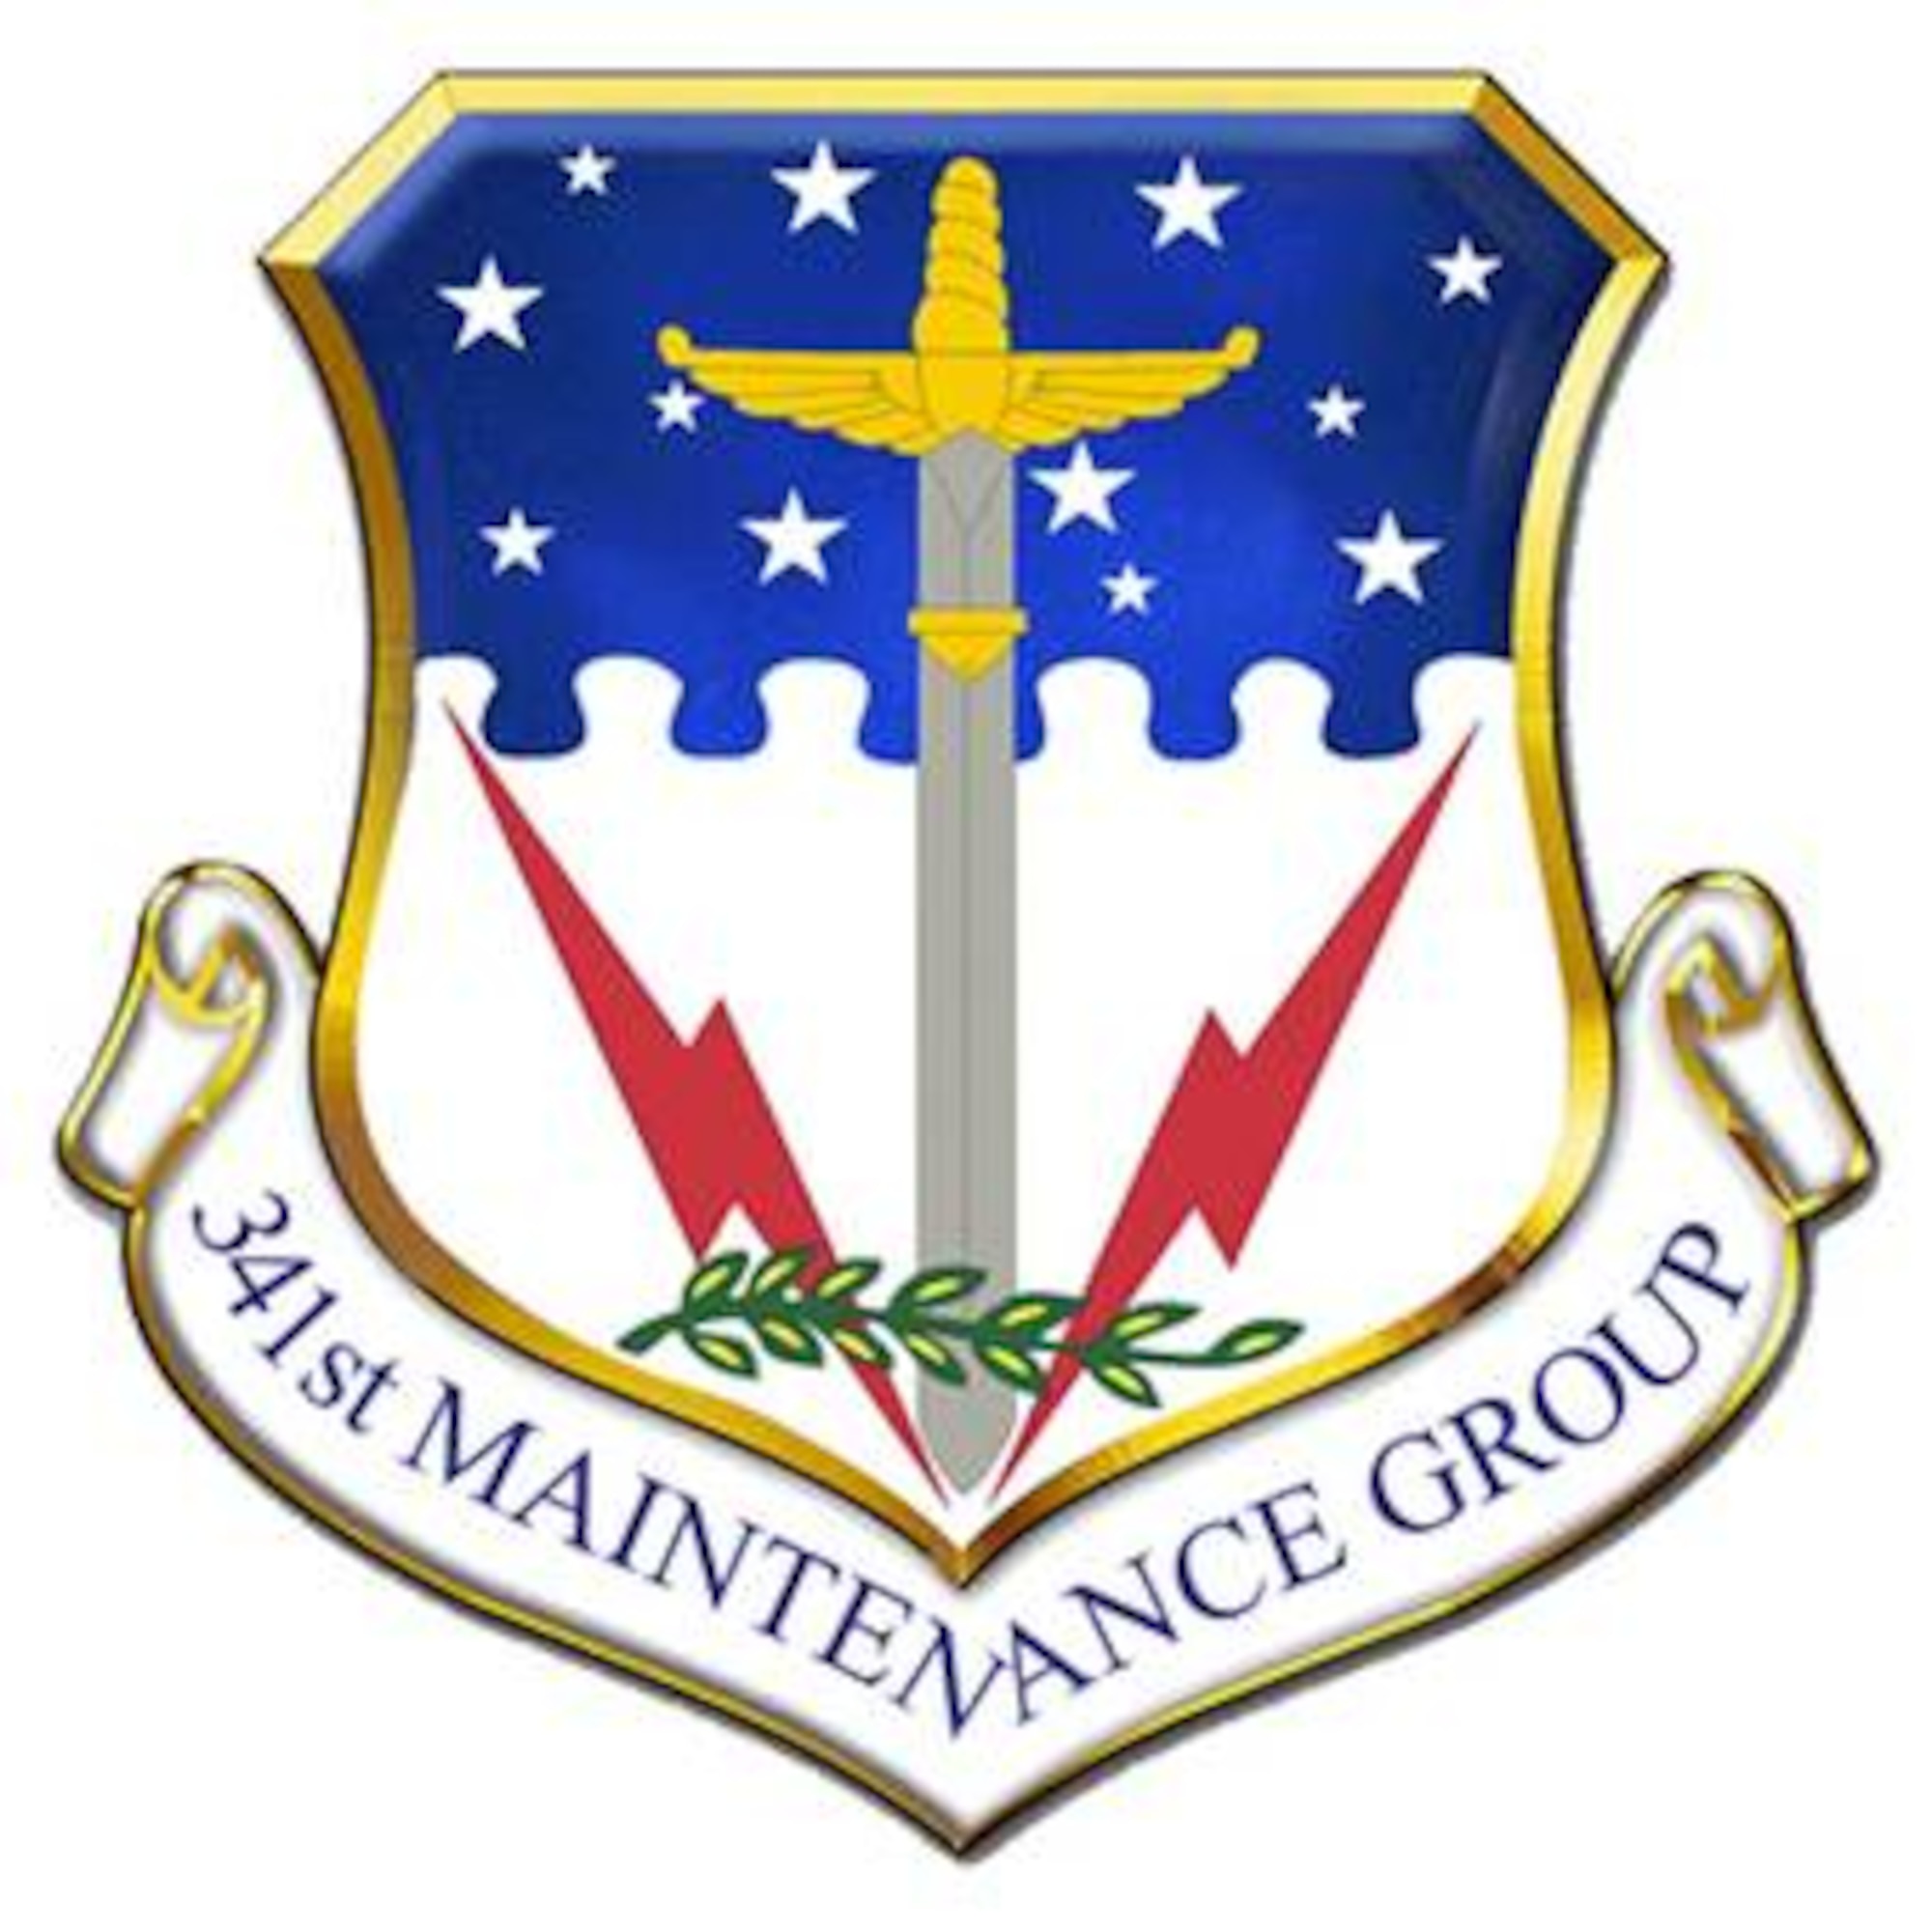 341st Maintenance Group shield